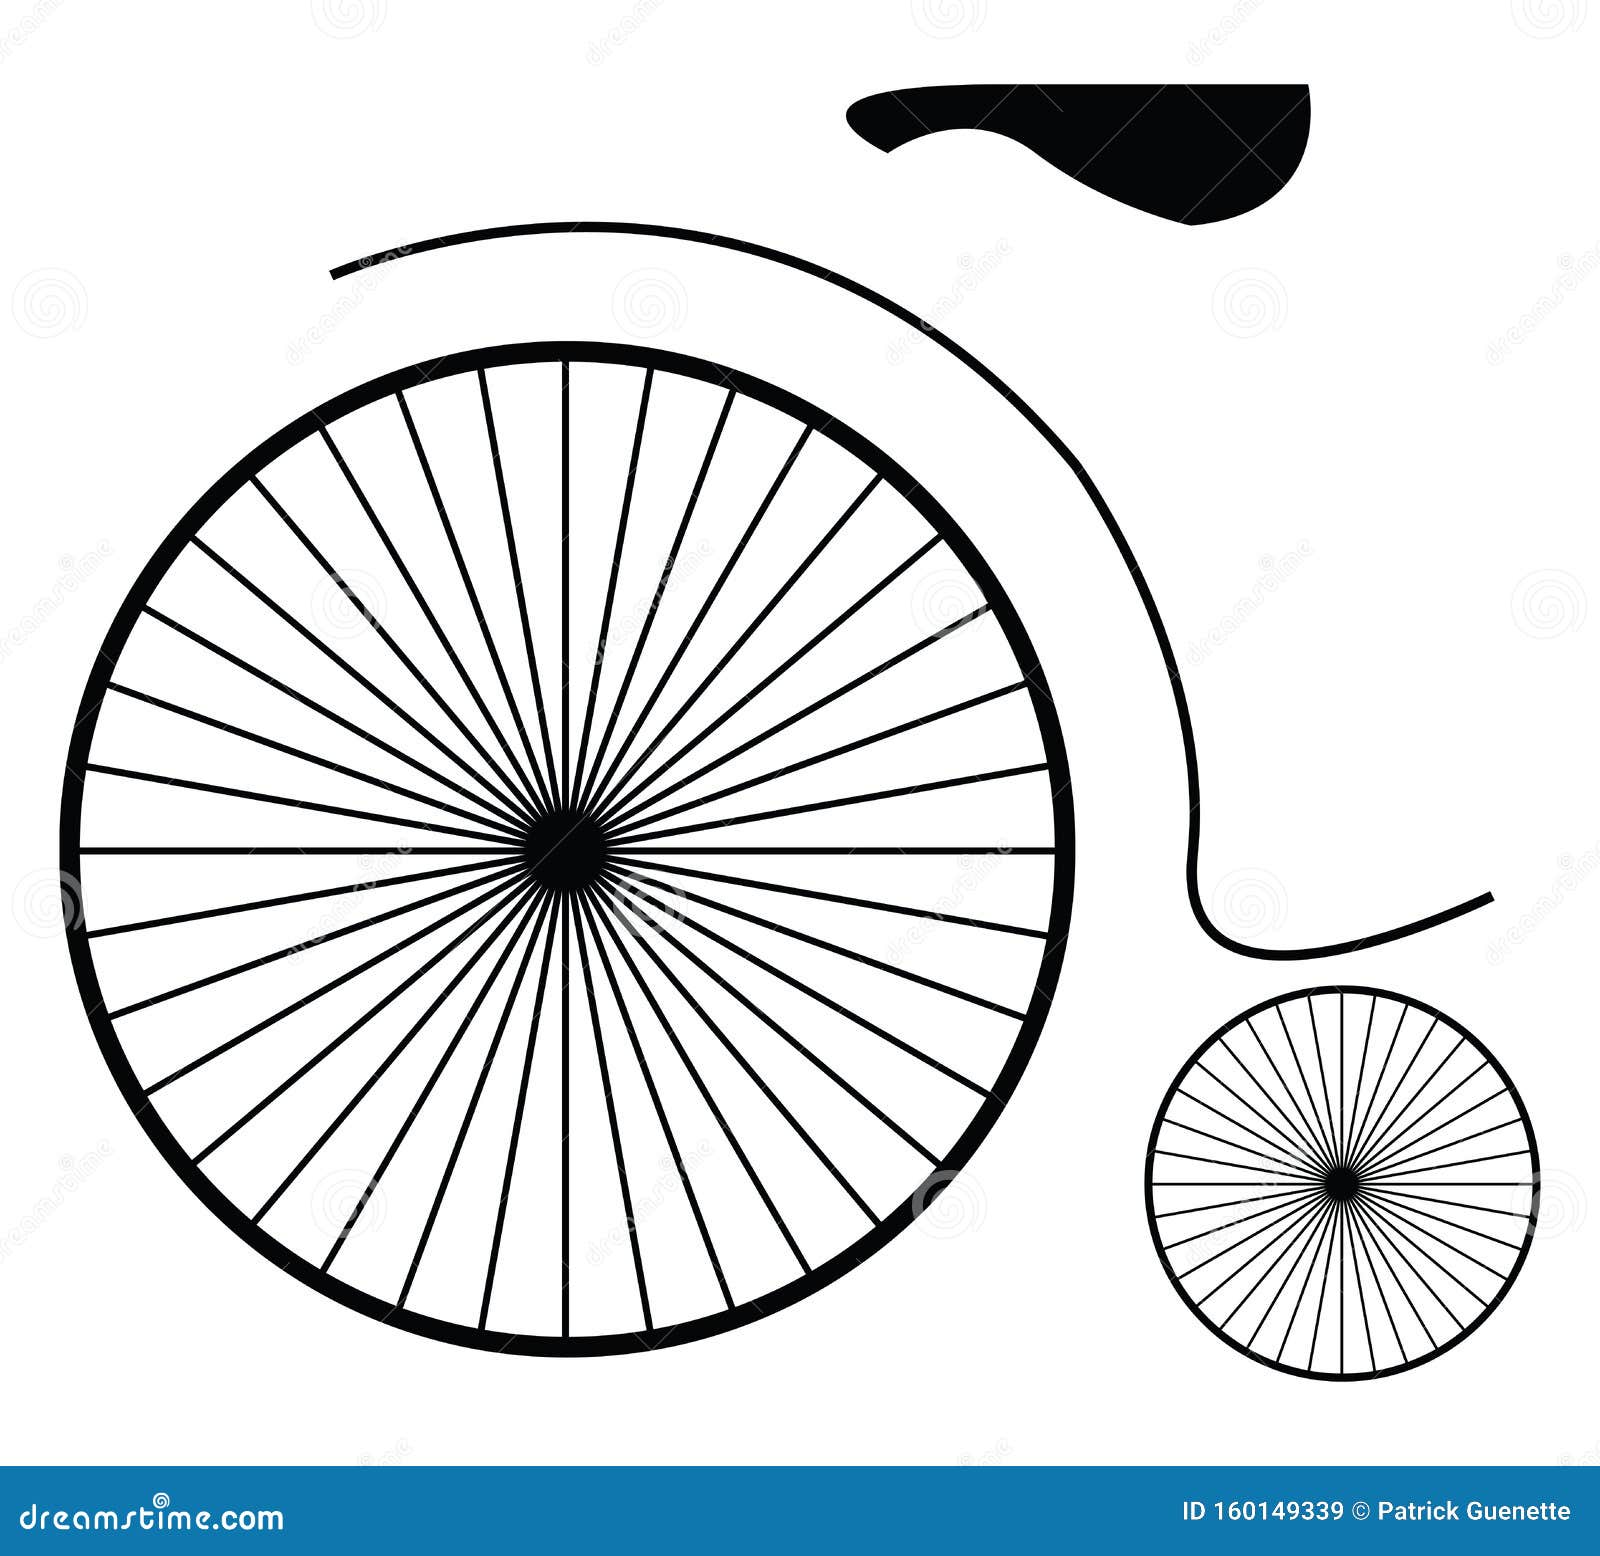 cycle with one big wheel